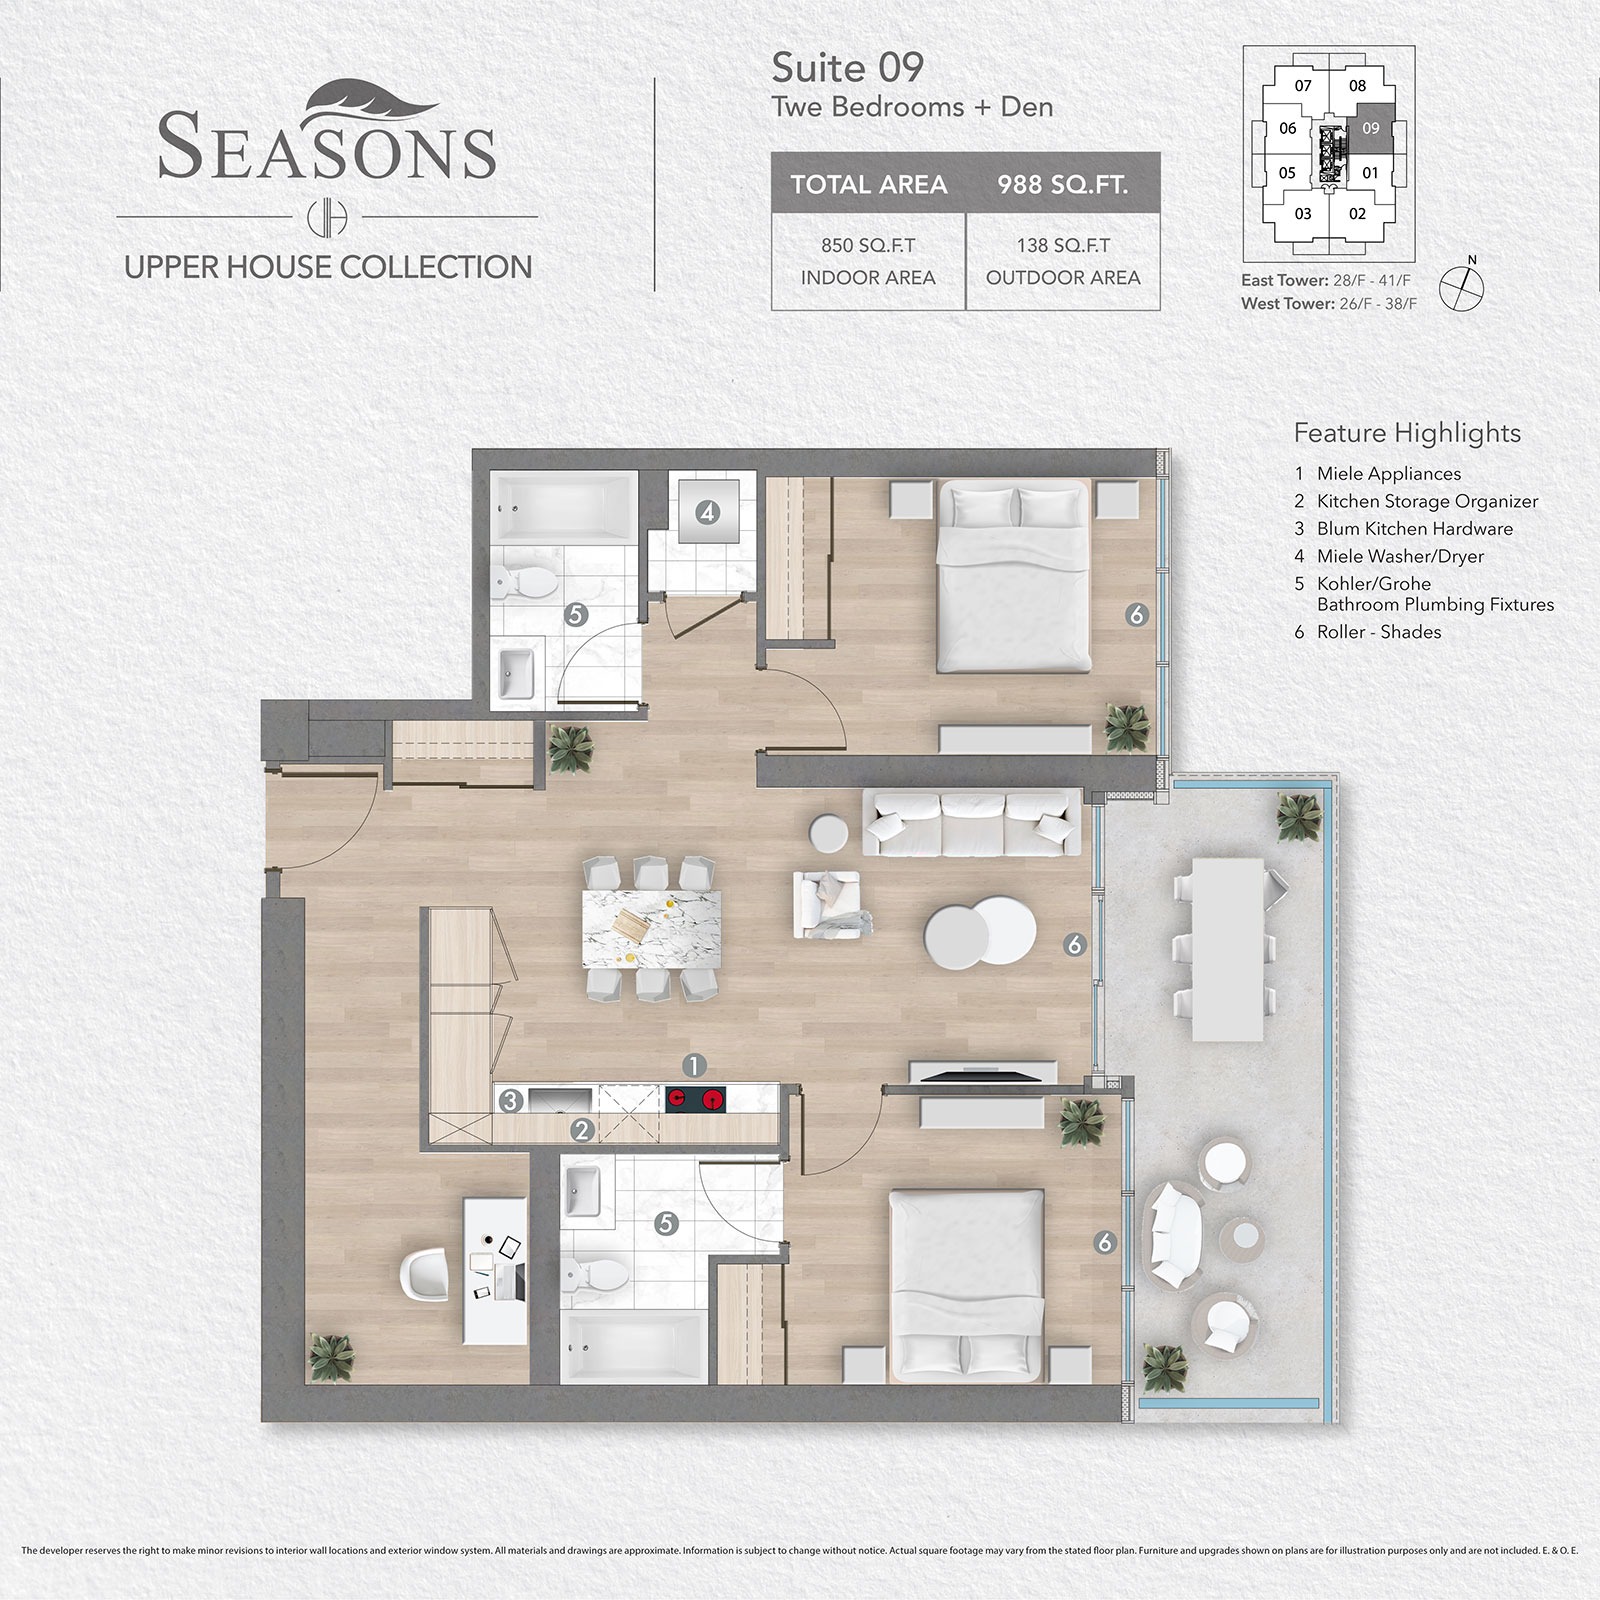  Floor Plan of Seasons II Condos with undefined beds